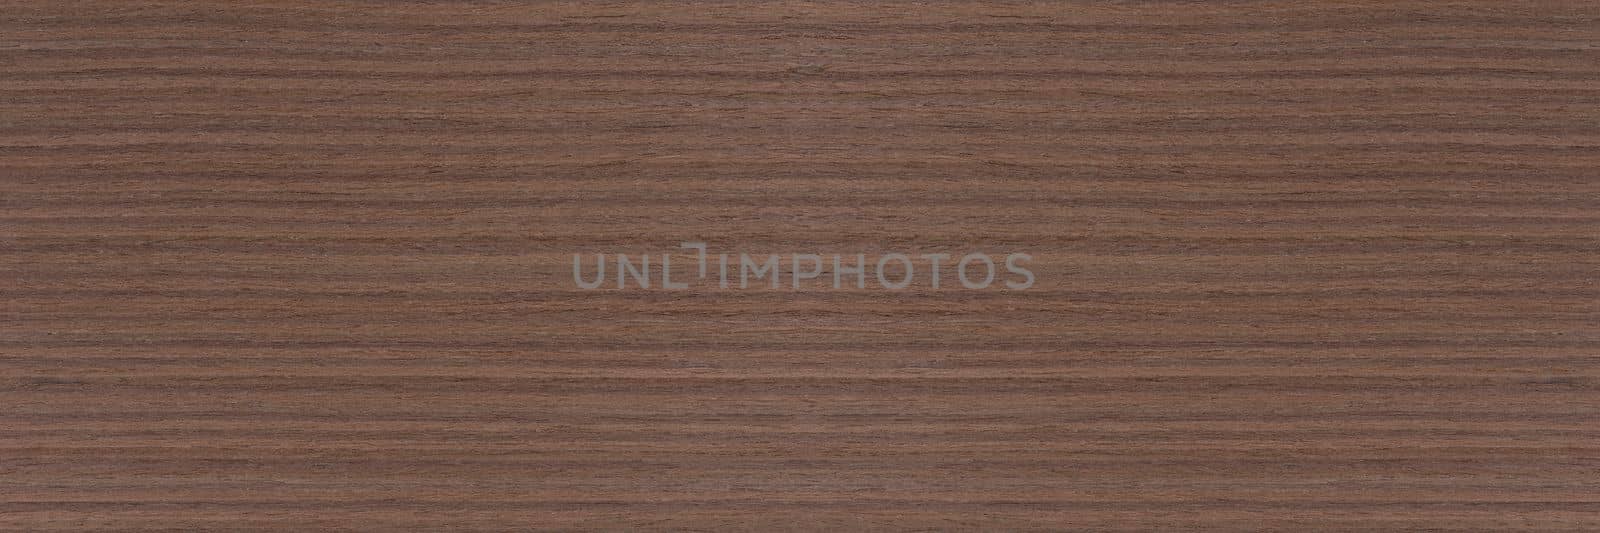 Dark brown walnut wood texture, natural wood pattern for making furniture, parquet or doors. Top view of natural veneer